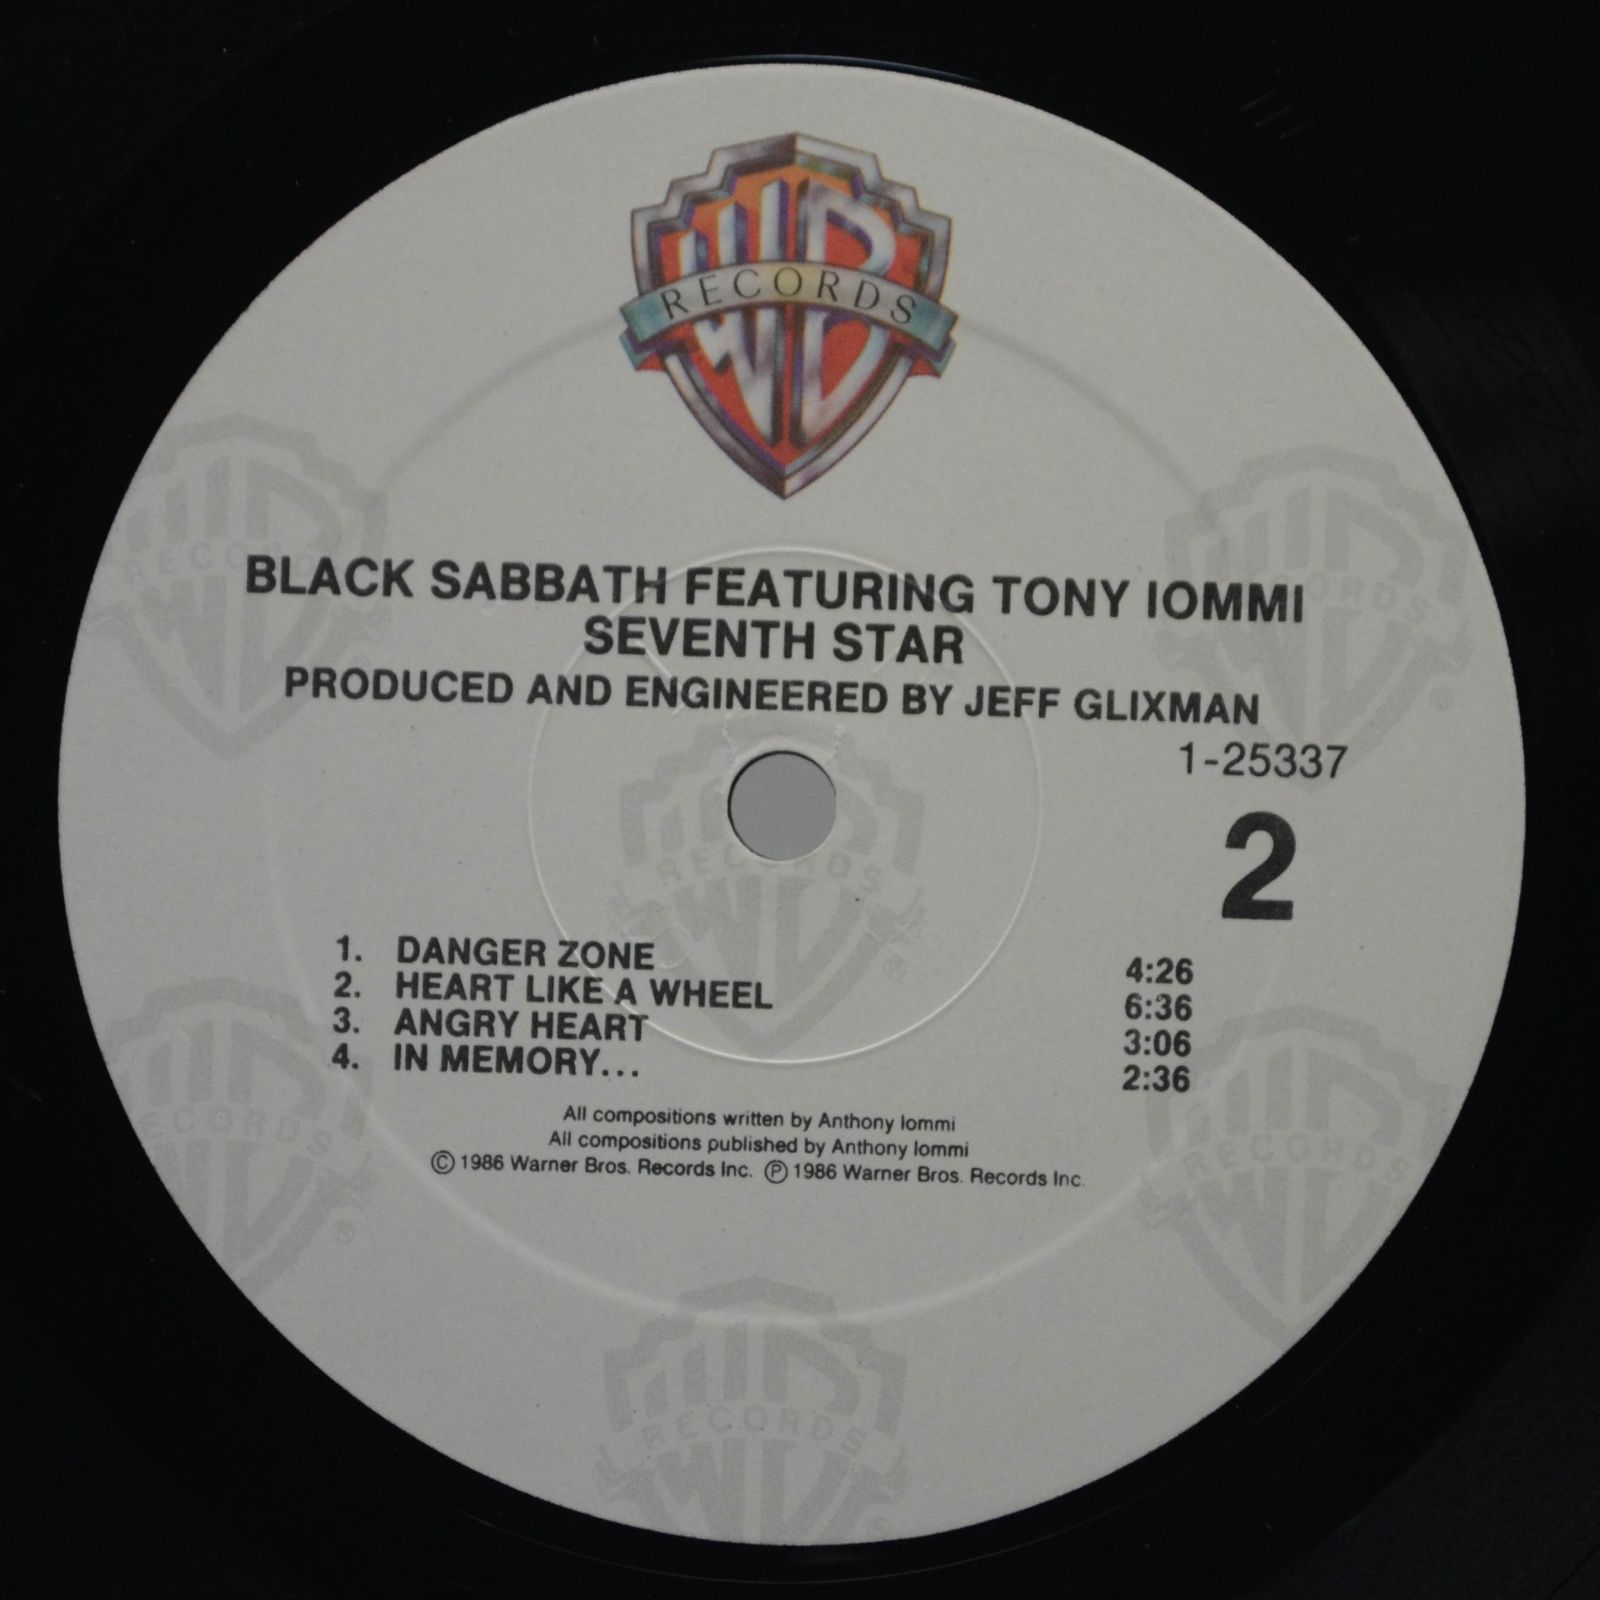 Black Sabbath Featuring Tony Iommi — Seventh Star (USA), 1986